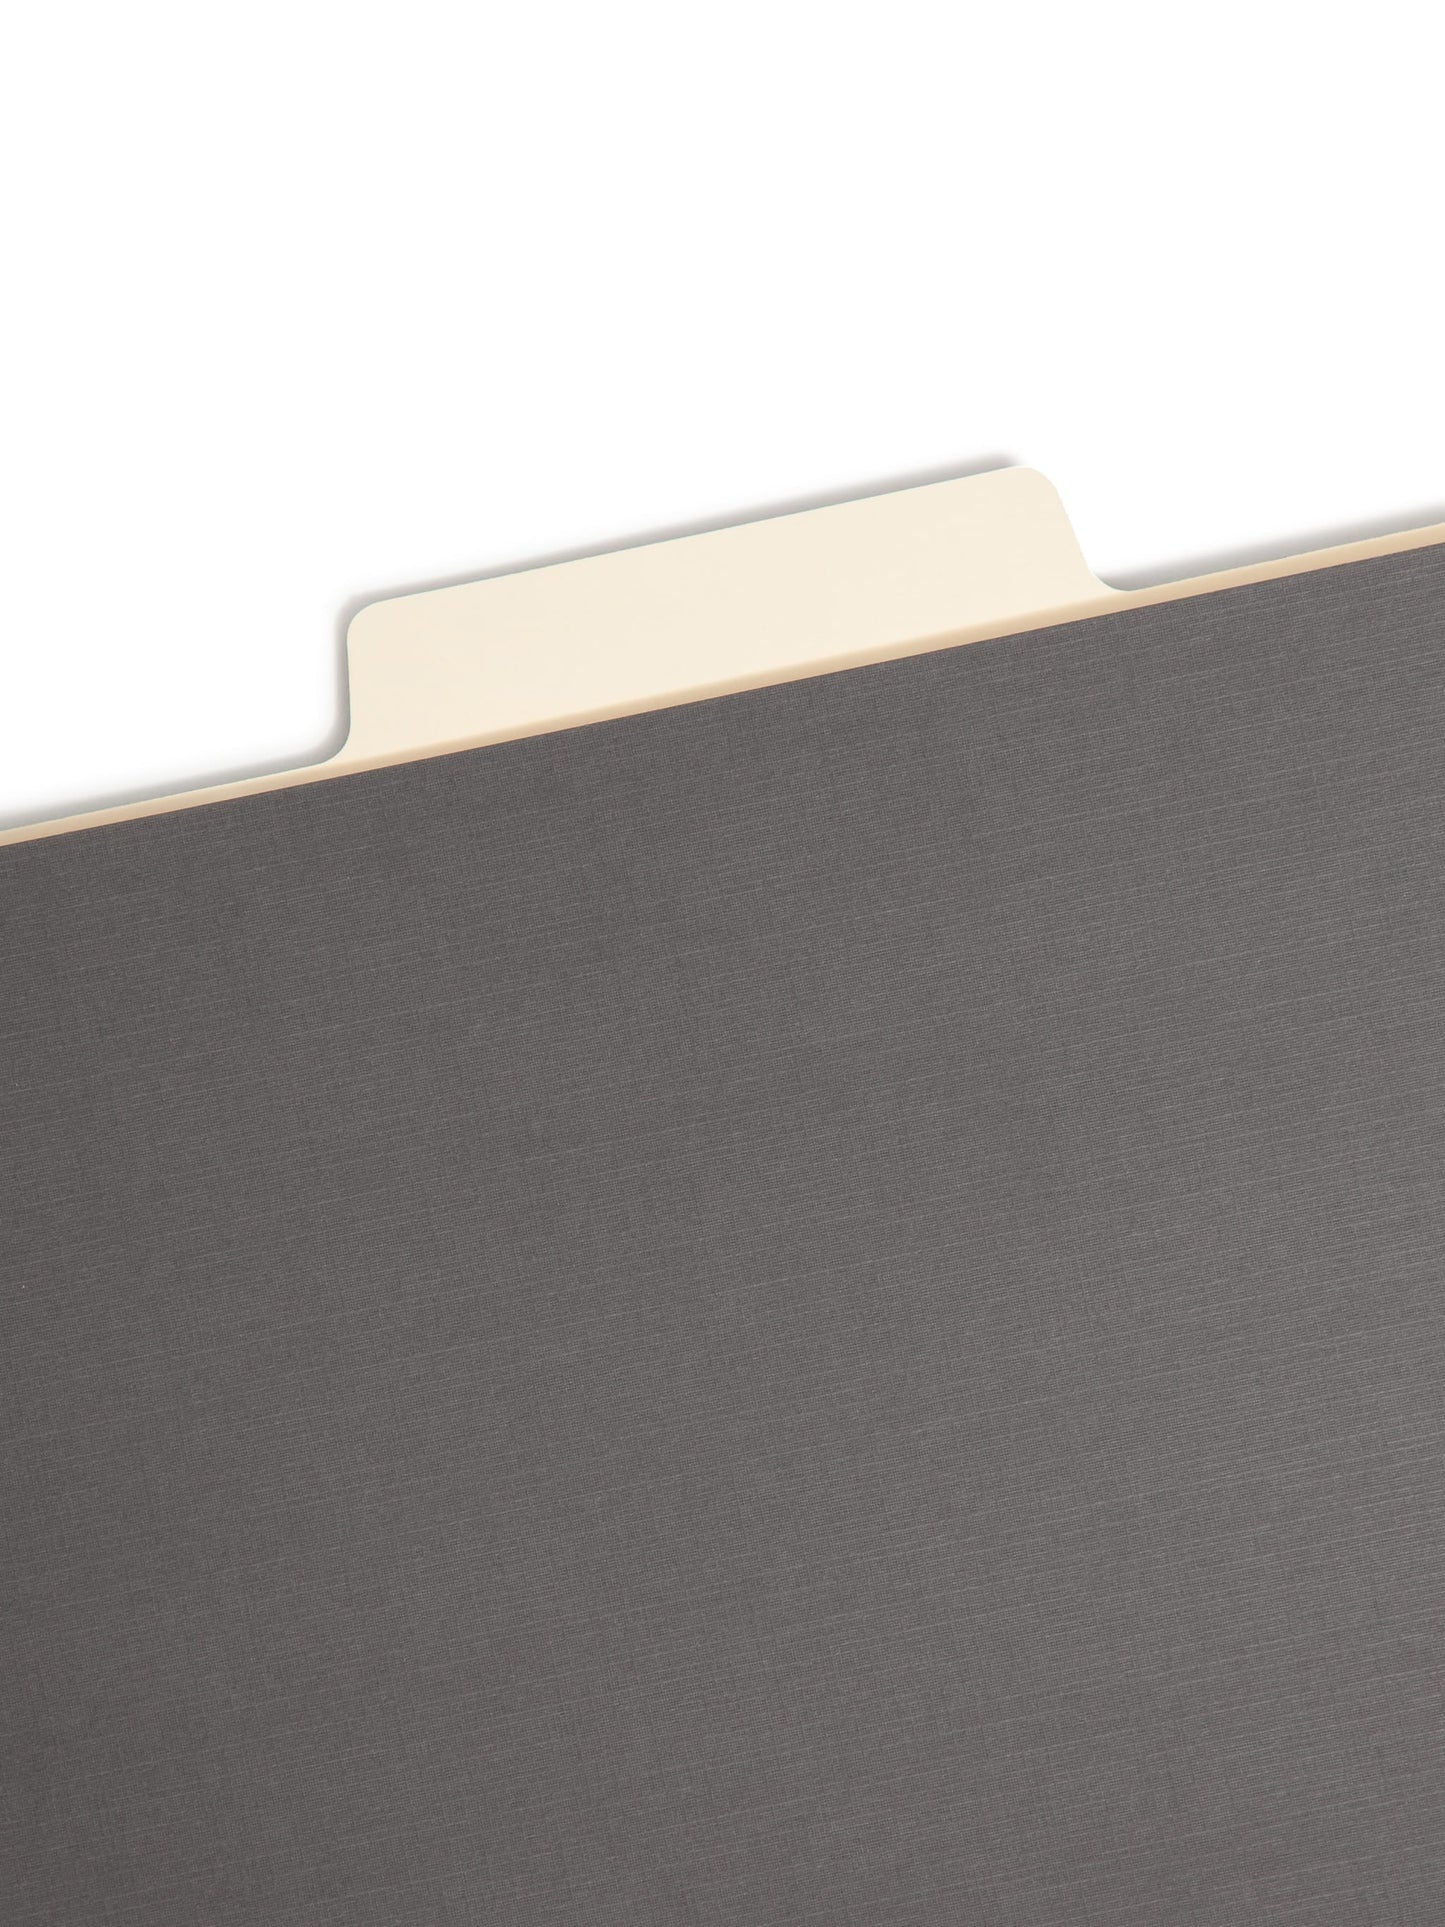 SuperTab® Classification File Folders, Dark Gray Color, Letter Size, 